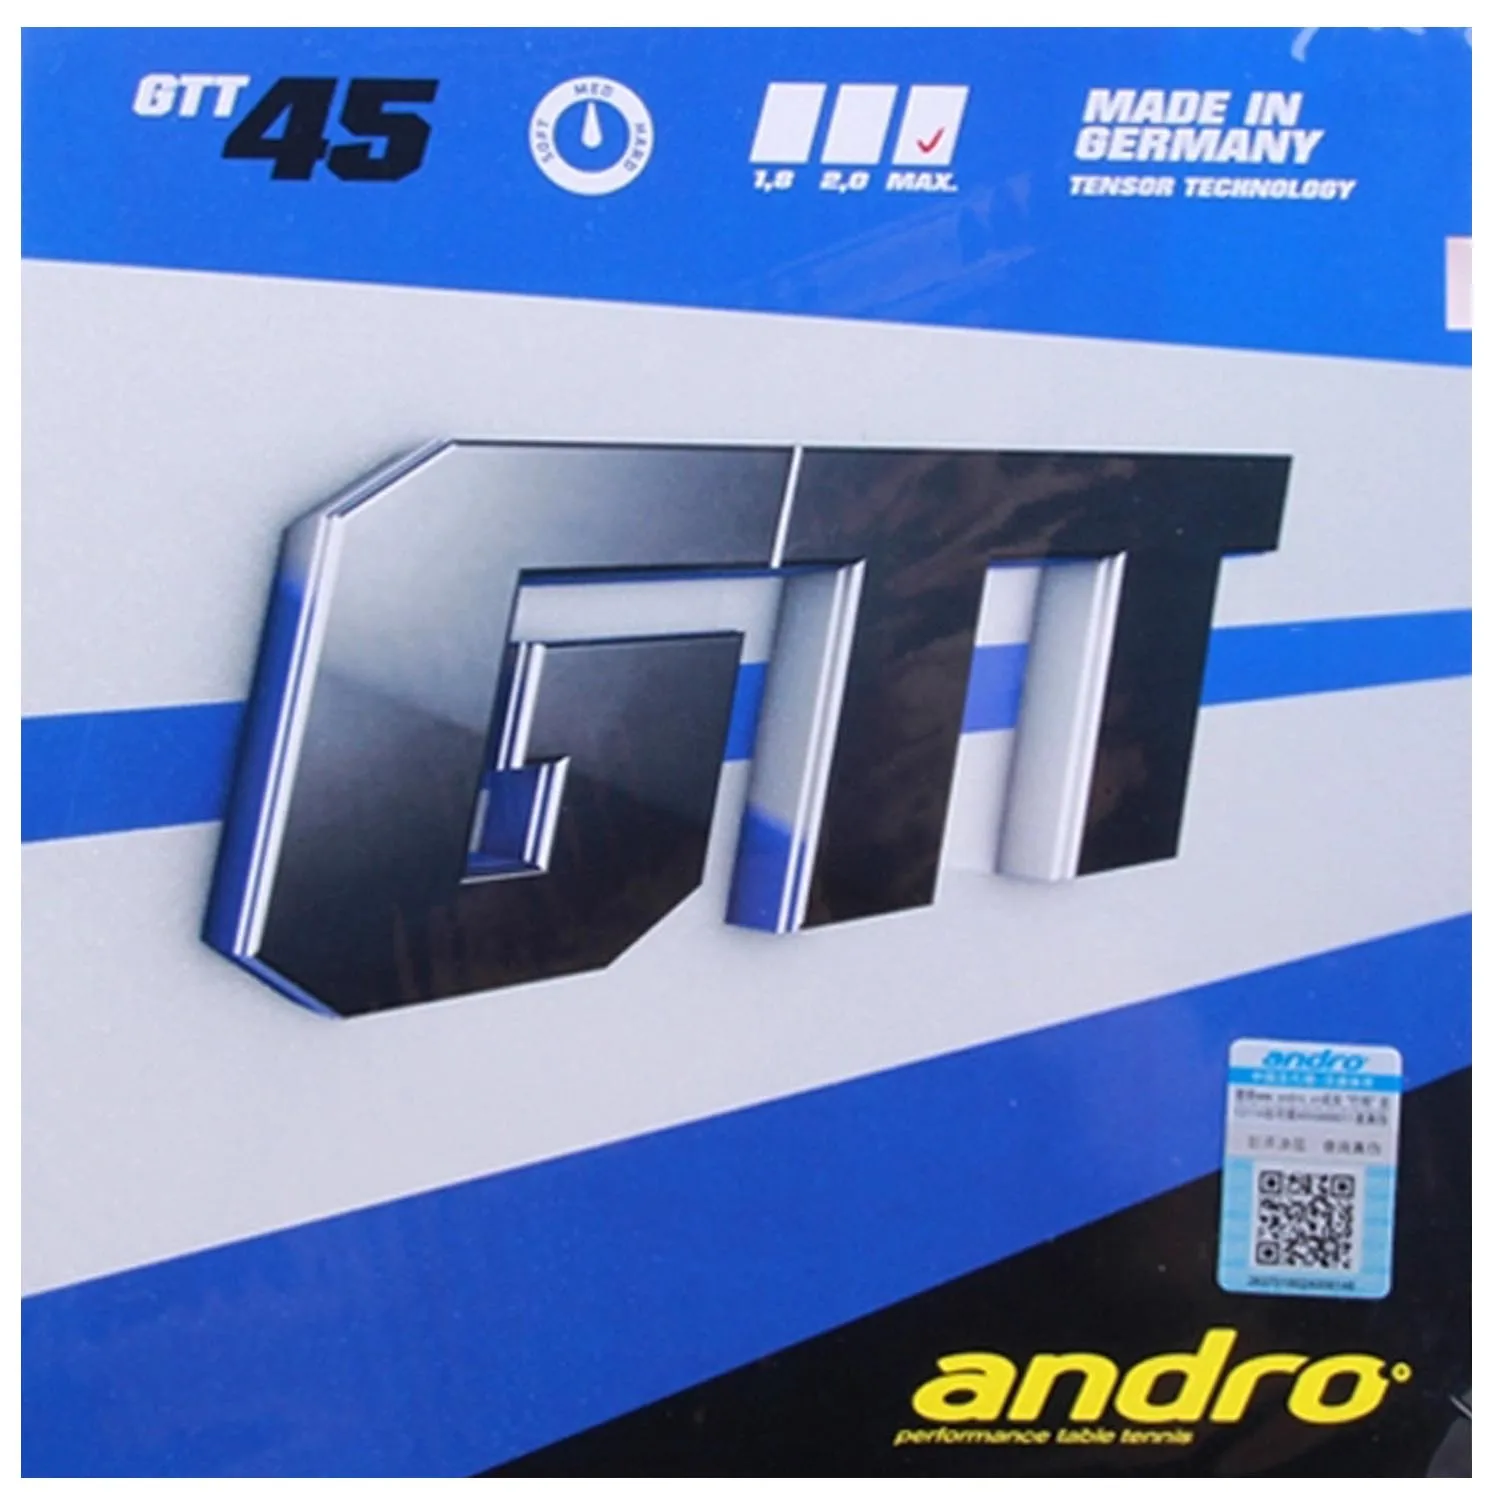 Andro GTT45 masa tenisi kauçuk hızlı saldırı + döngü sivilce Andro ping pong sünger